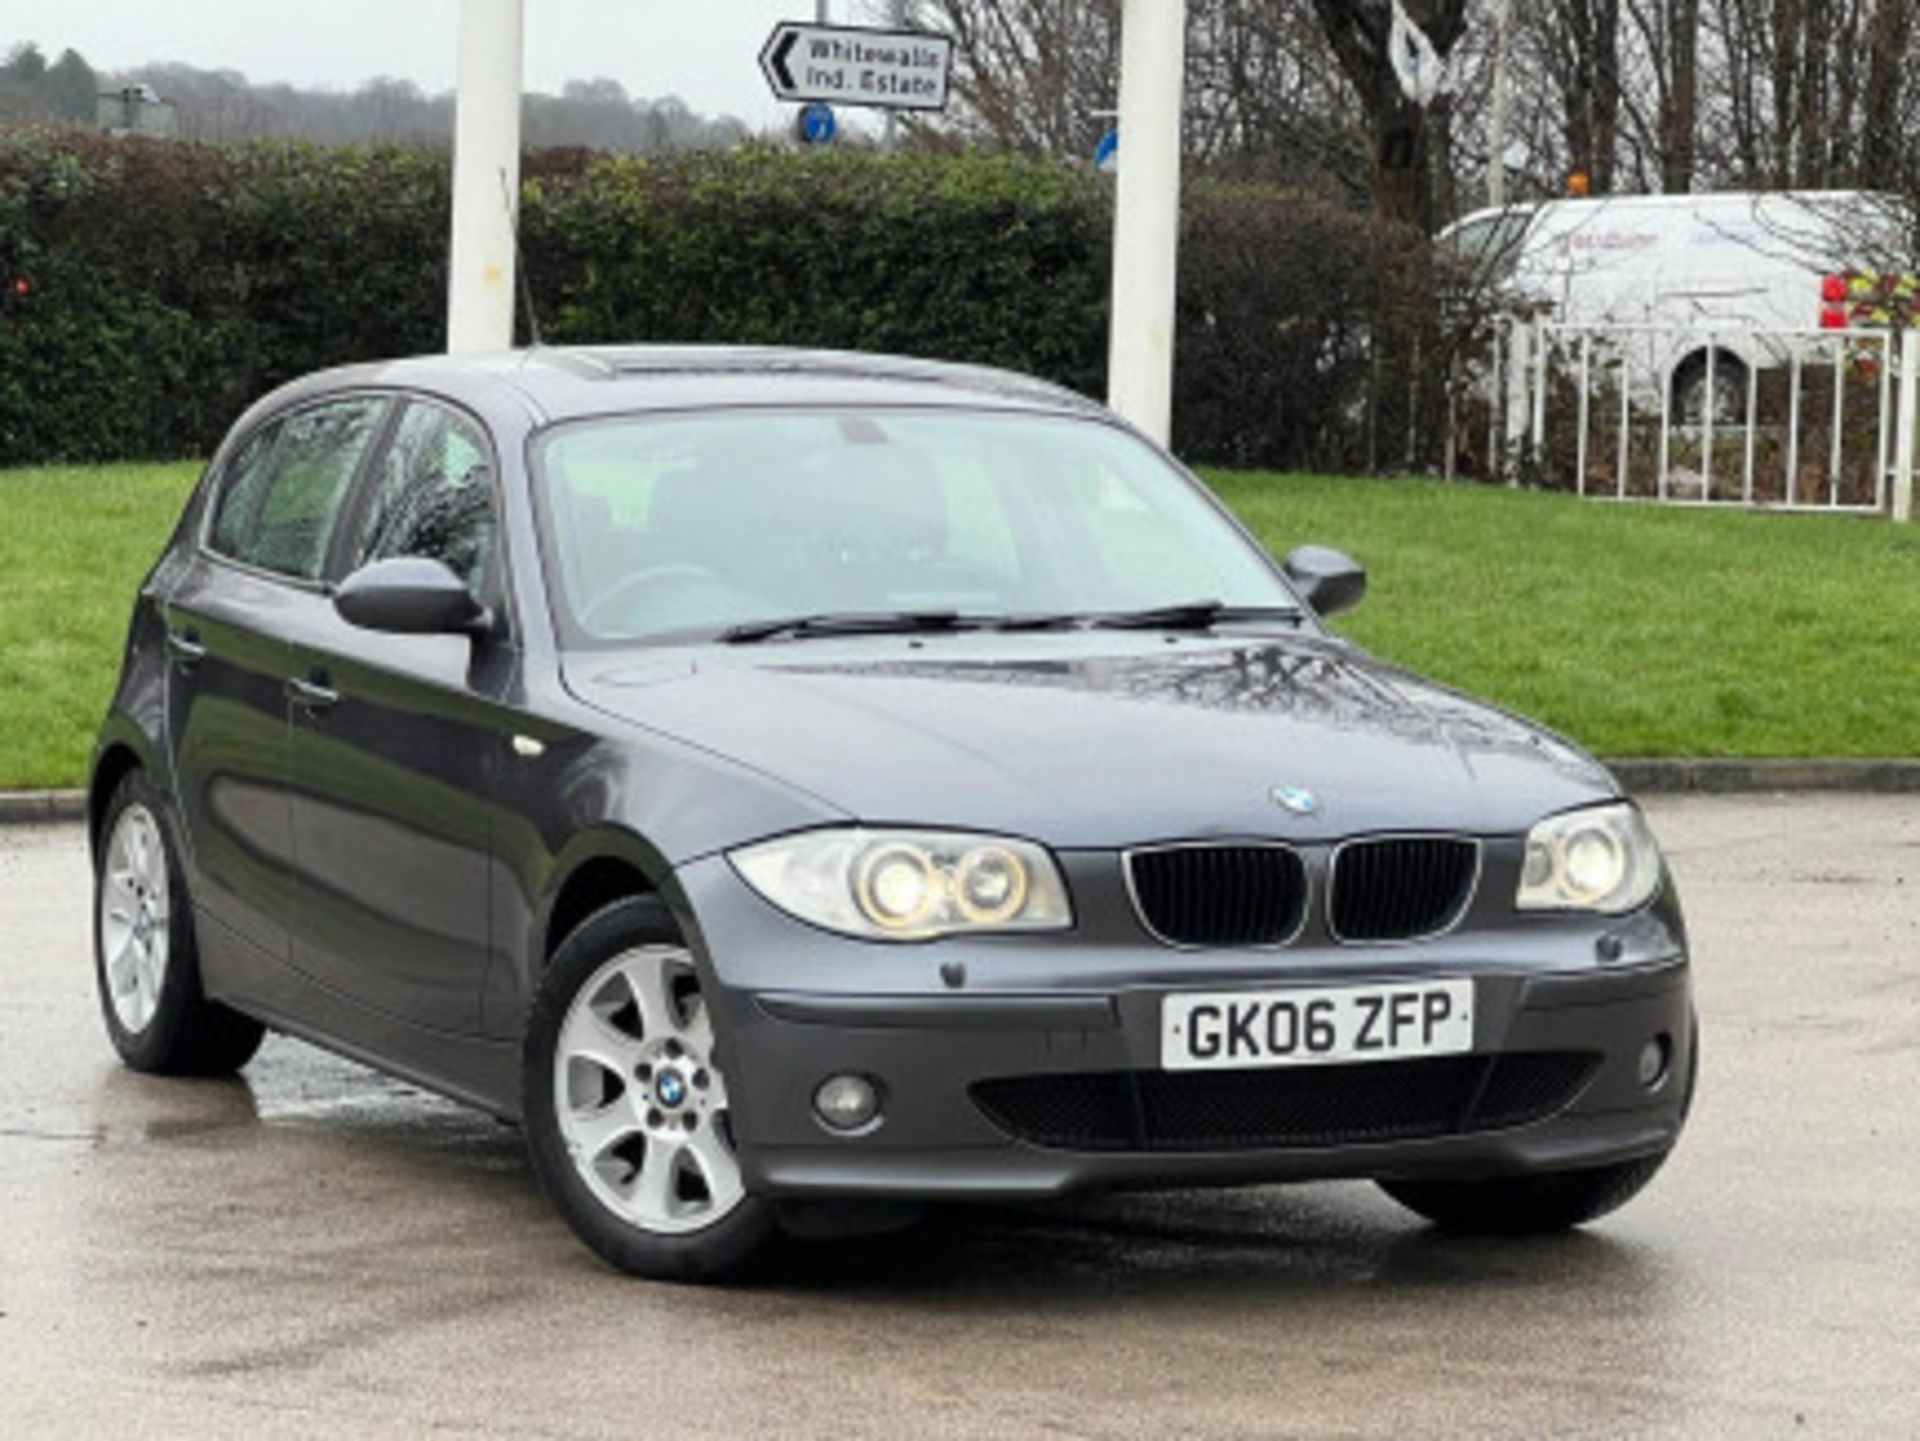 BMW 1 SERIES 2.0 120D SE STEPTRONIC - STYLE, PERFORMANCE >>--NO VAT ON HAMMER--<< - Image 44 of 91